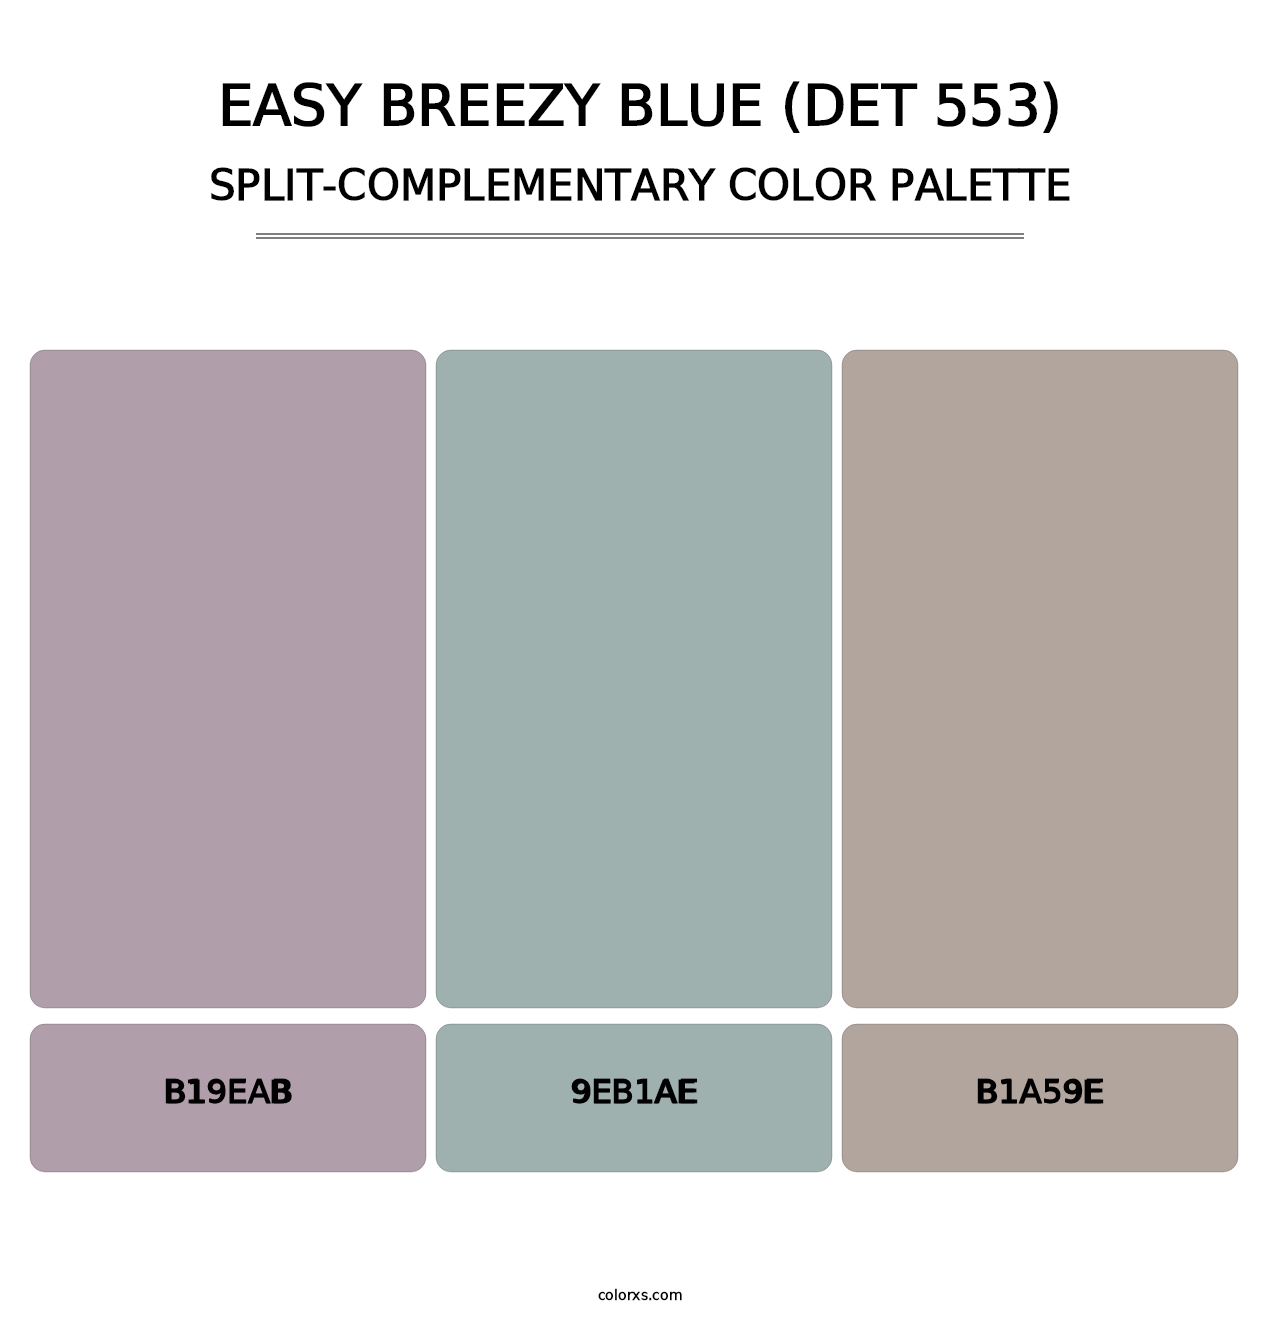 Easy Breezy Blue (DET 553) - Split-Complementary Color Palette